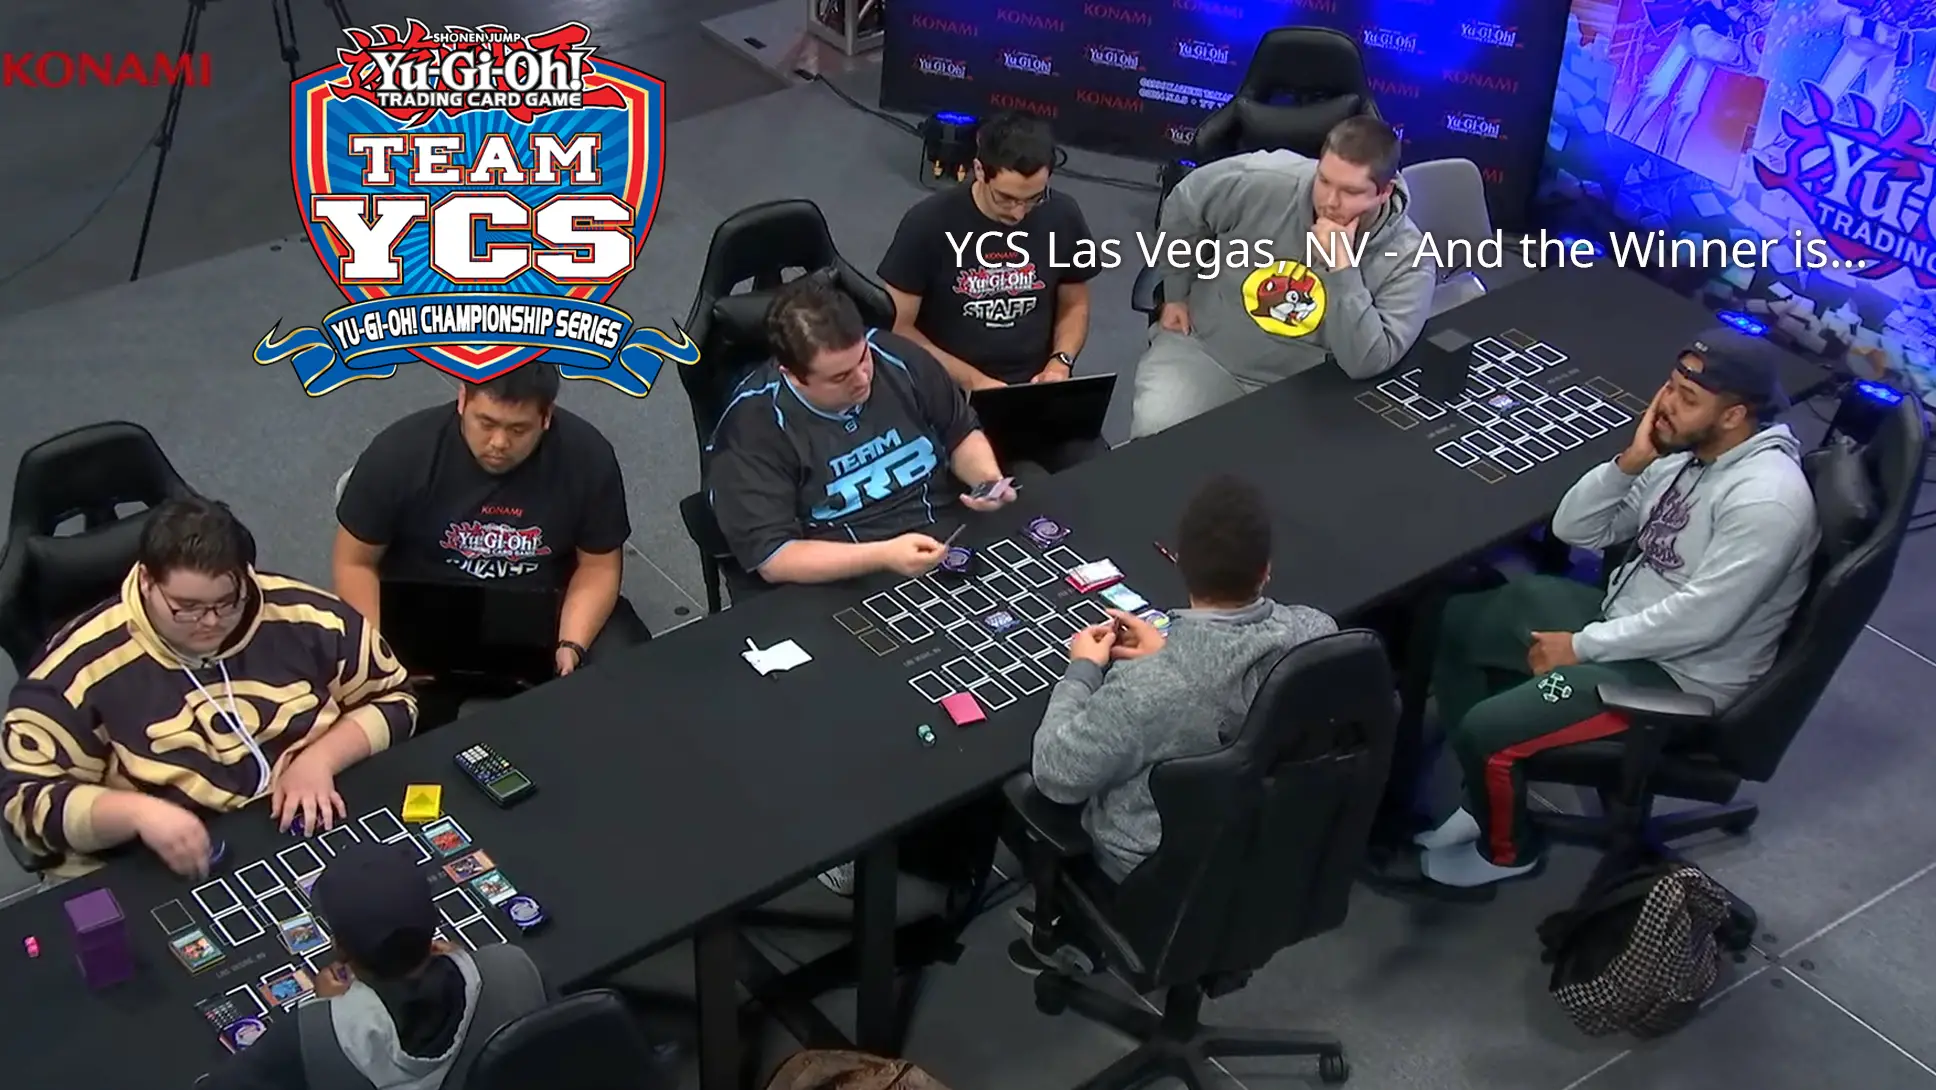 YCS Las Vegas, NV And the Winner is… YuGiOh! World